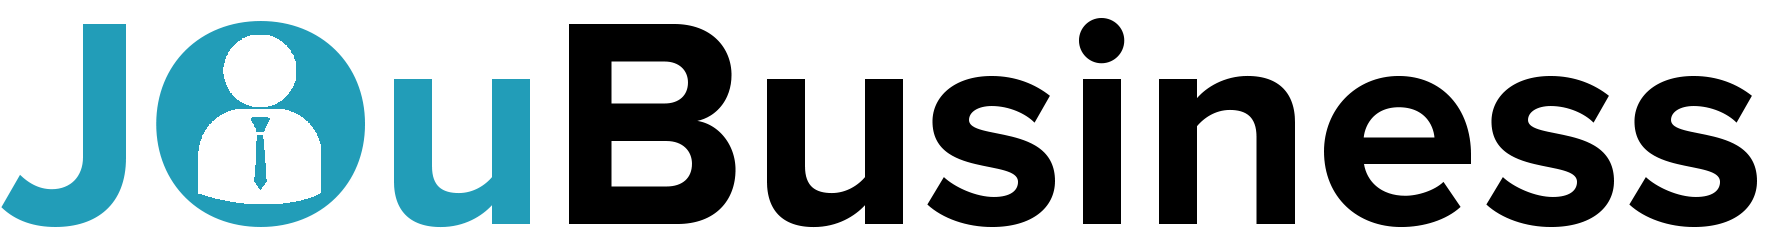 JOuBusiness logo